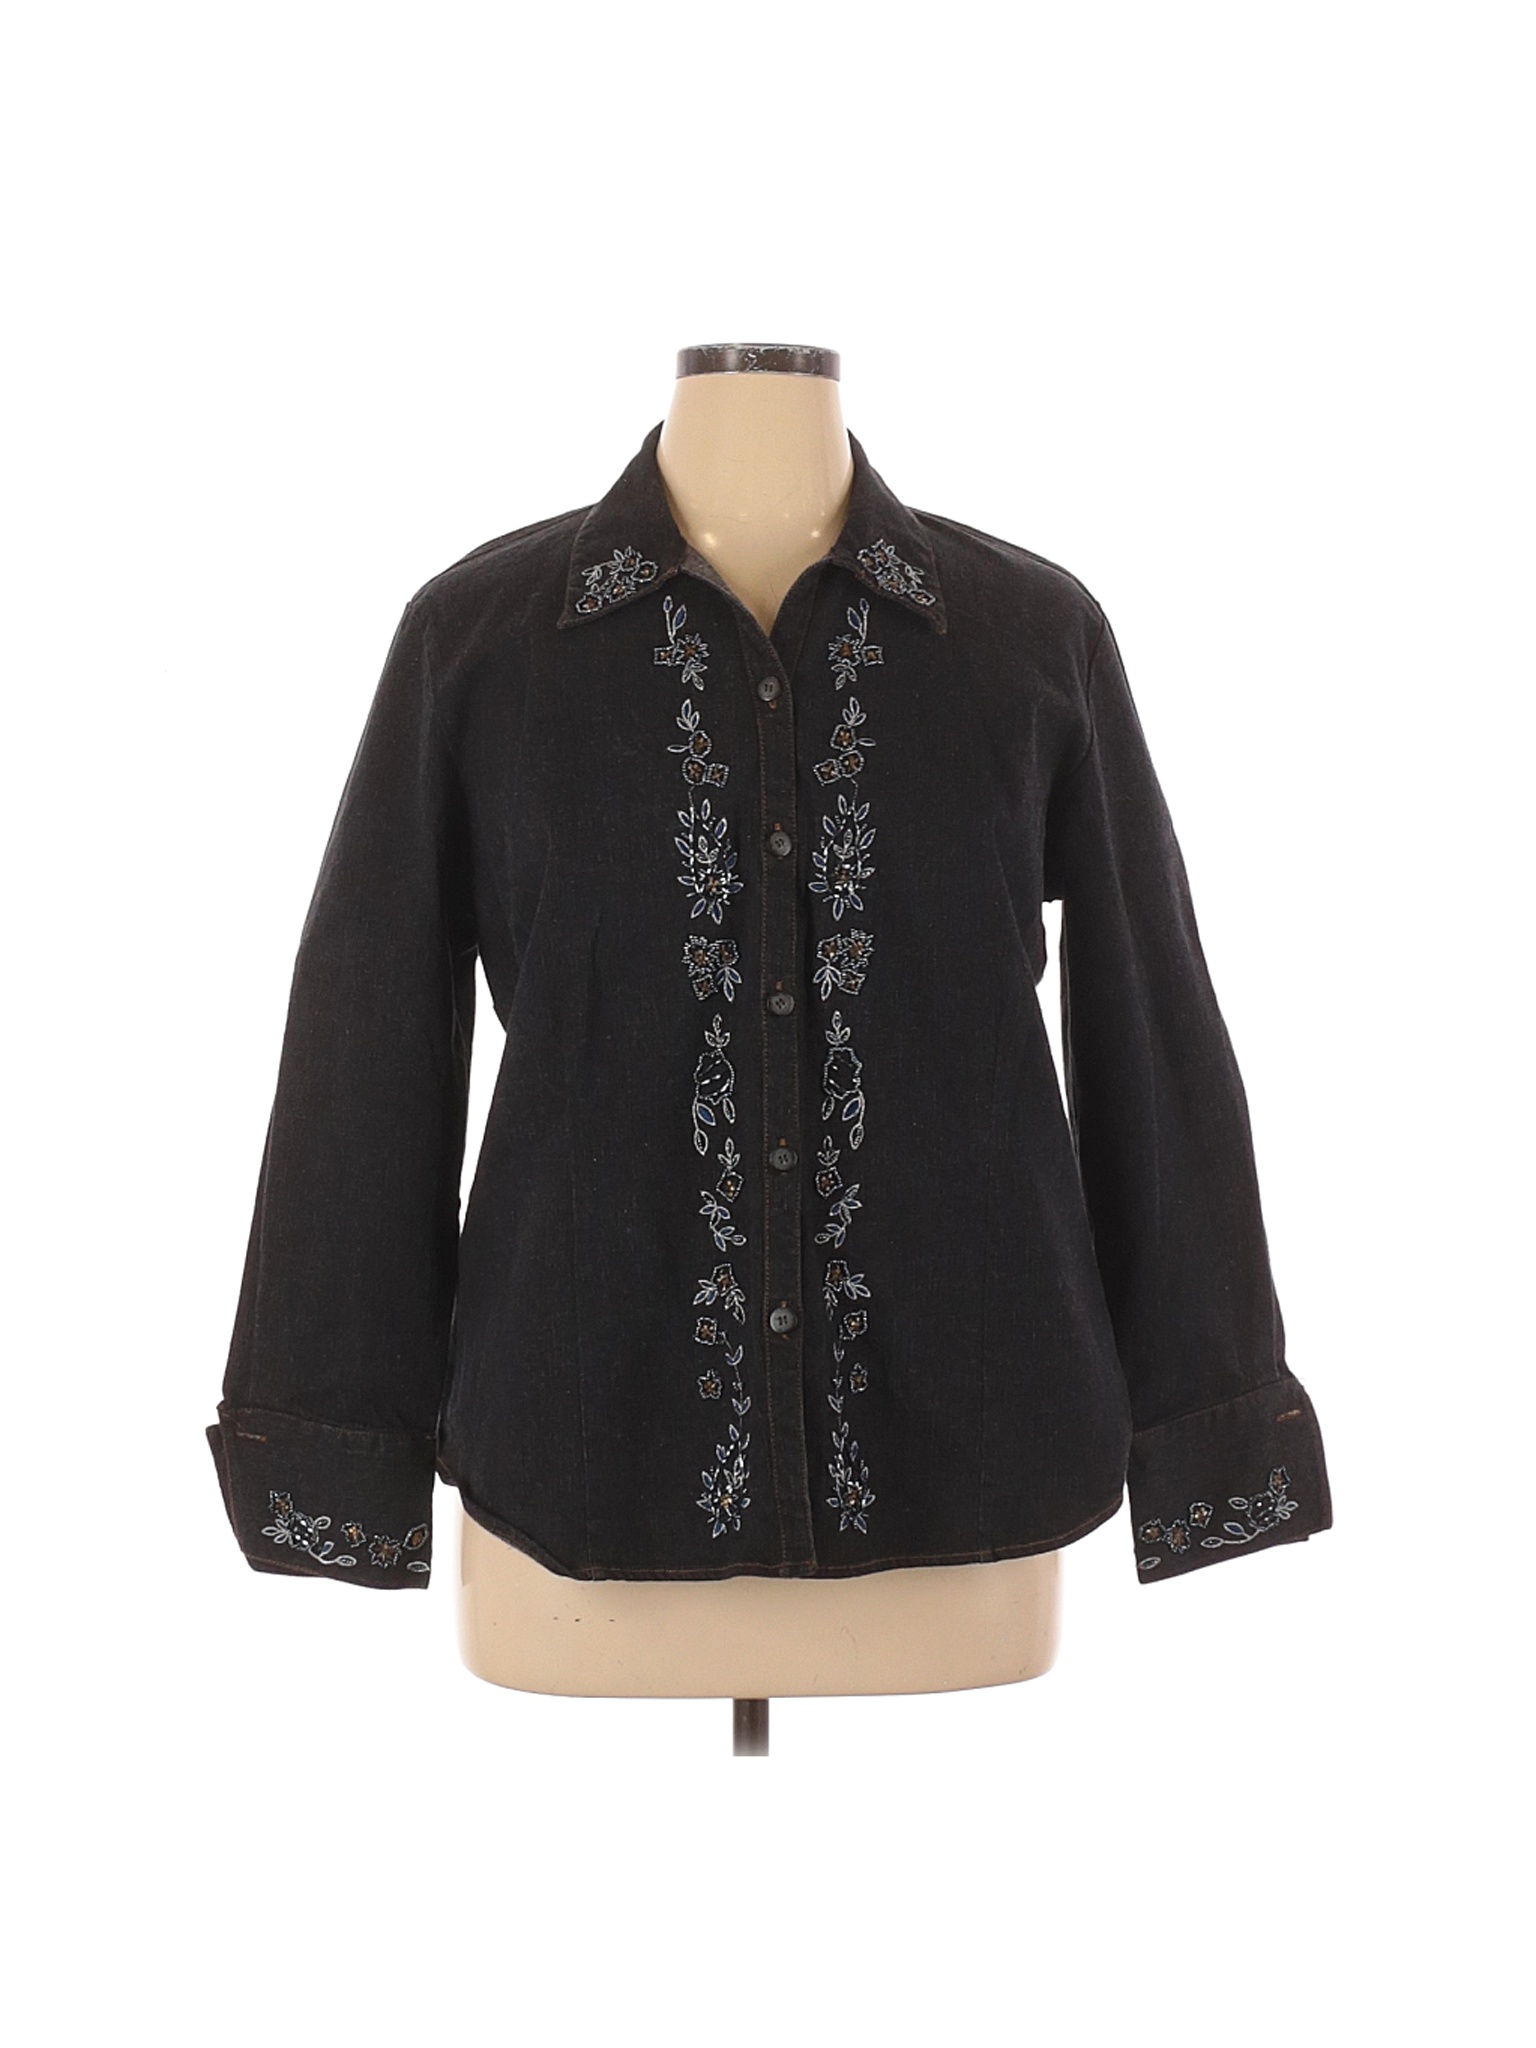 Susan Graver Women Black Jacket 1X Plus | eBay